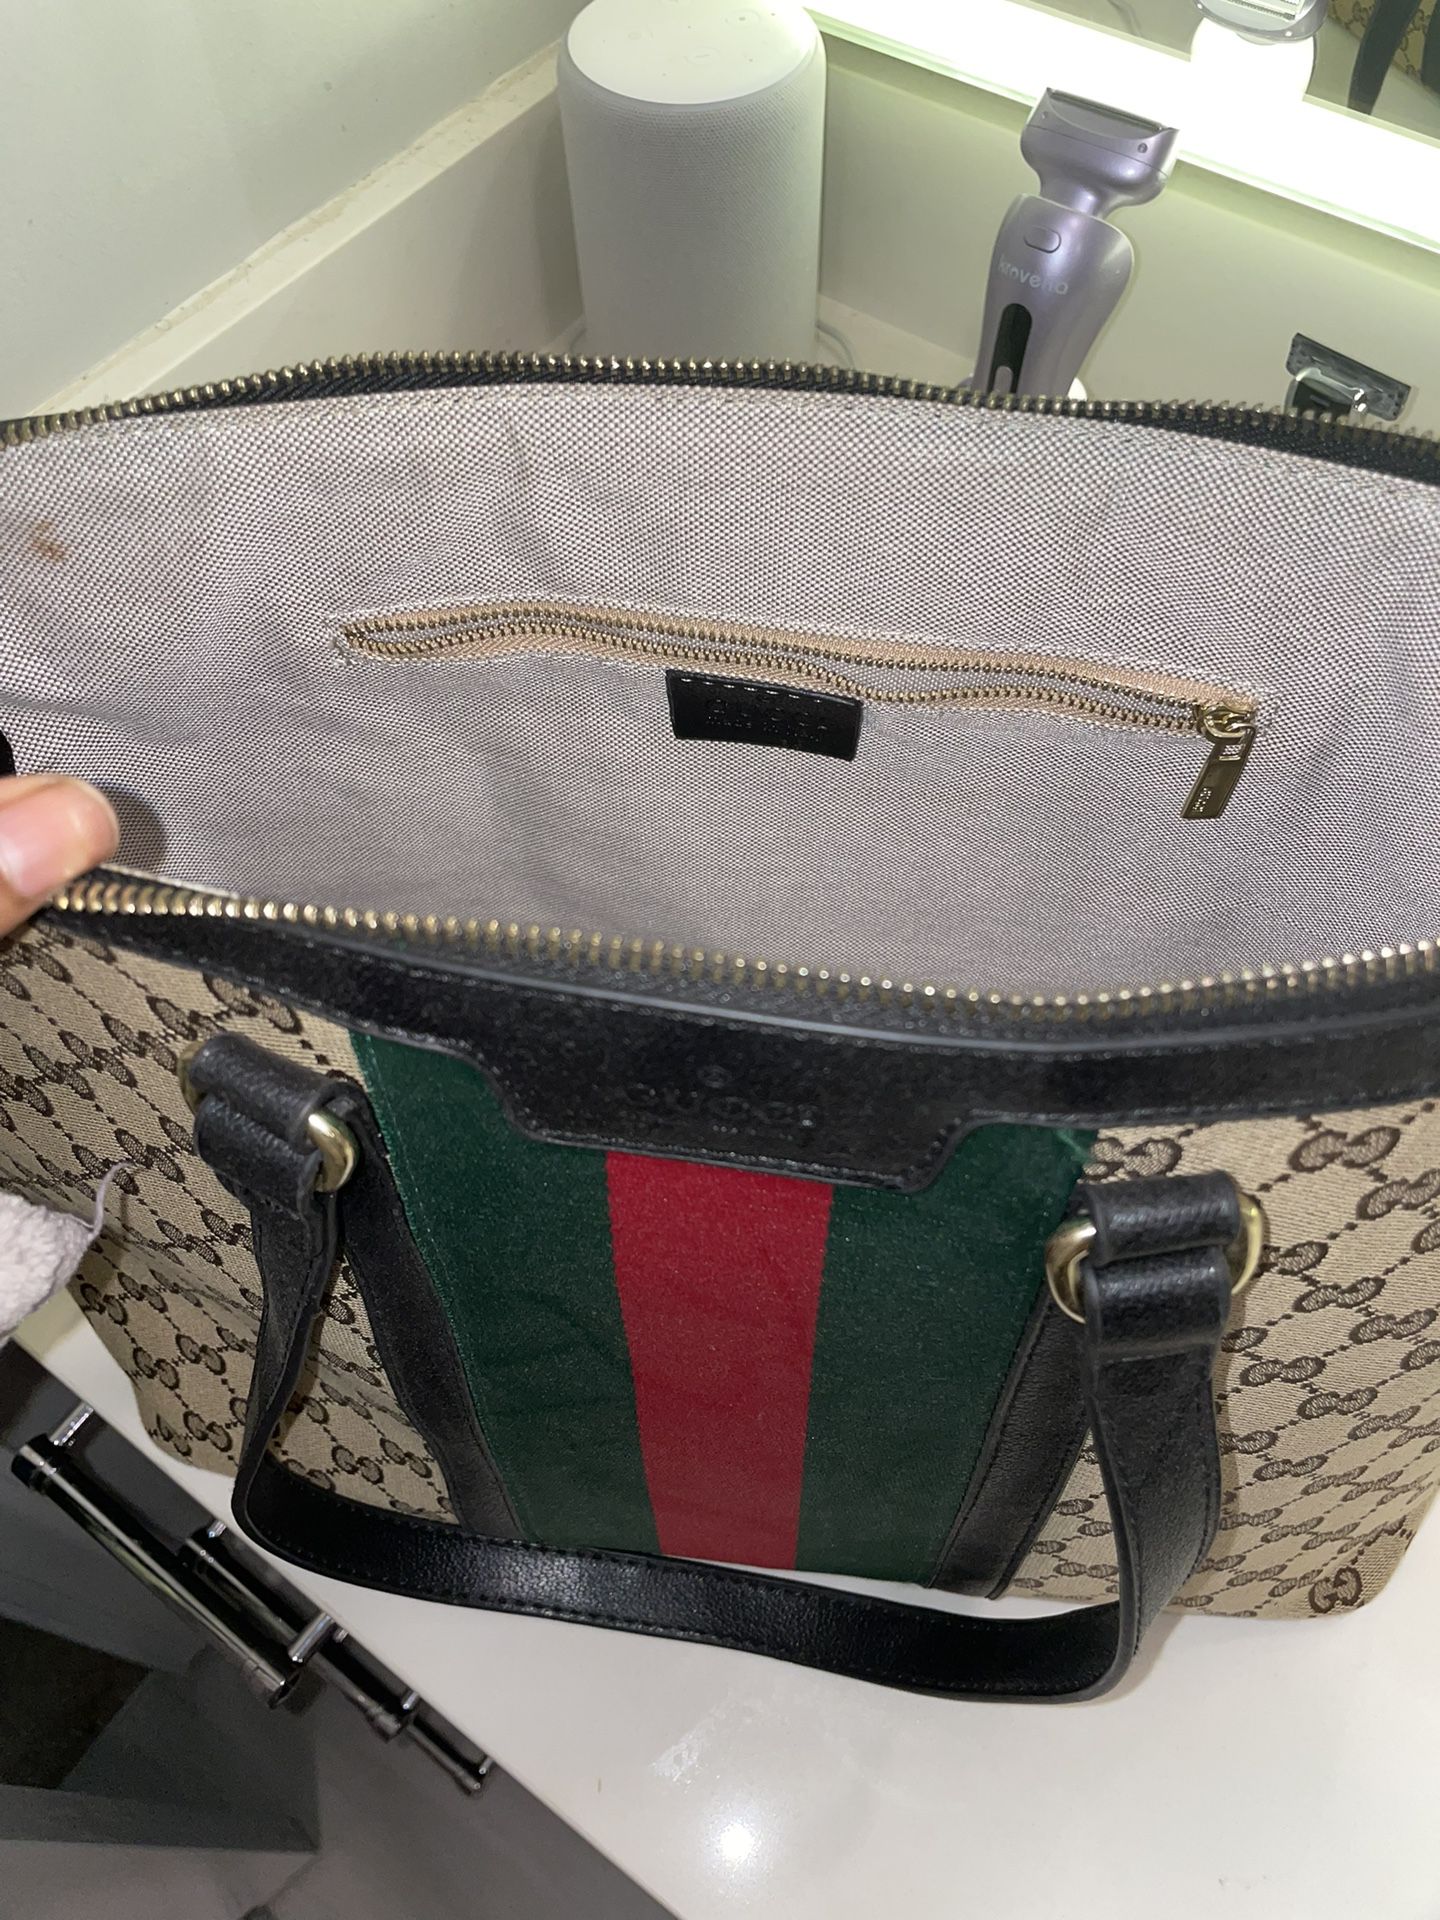 Limited Edition Fiat 500 Gucci Tote Handbag for Sale in Atlanta, GA -  OfferUp